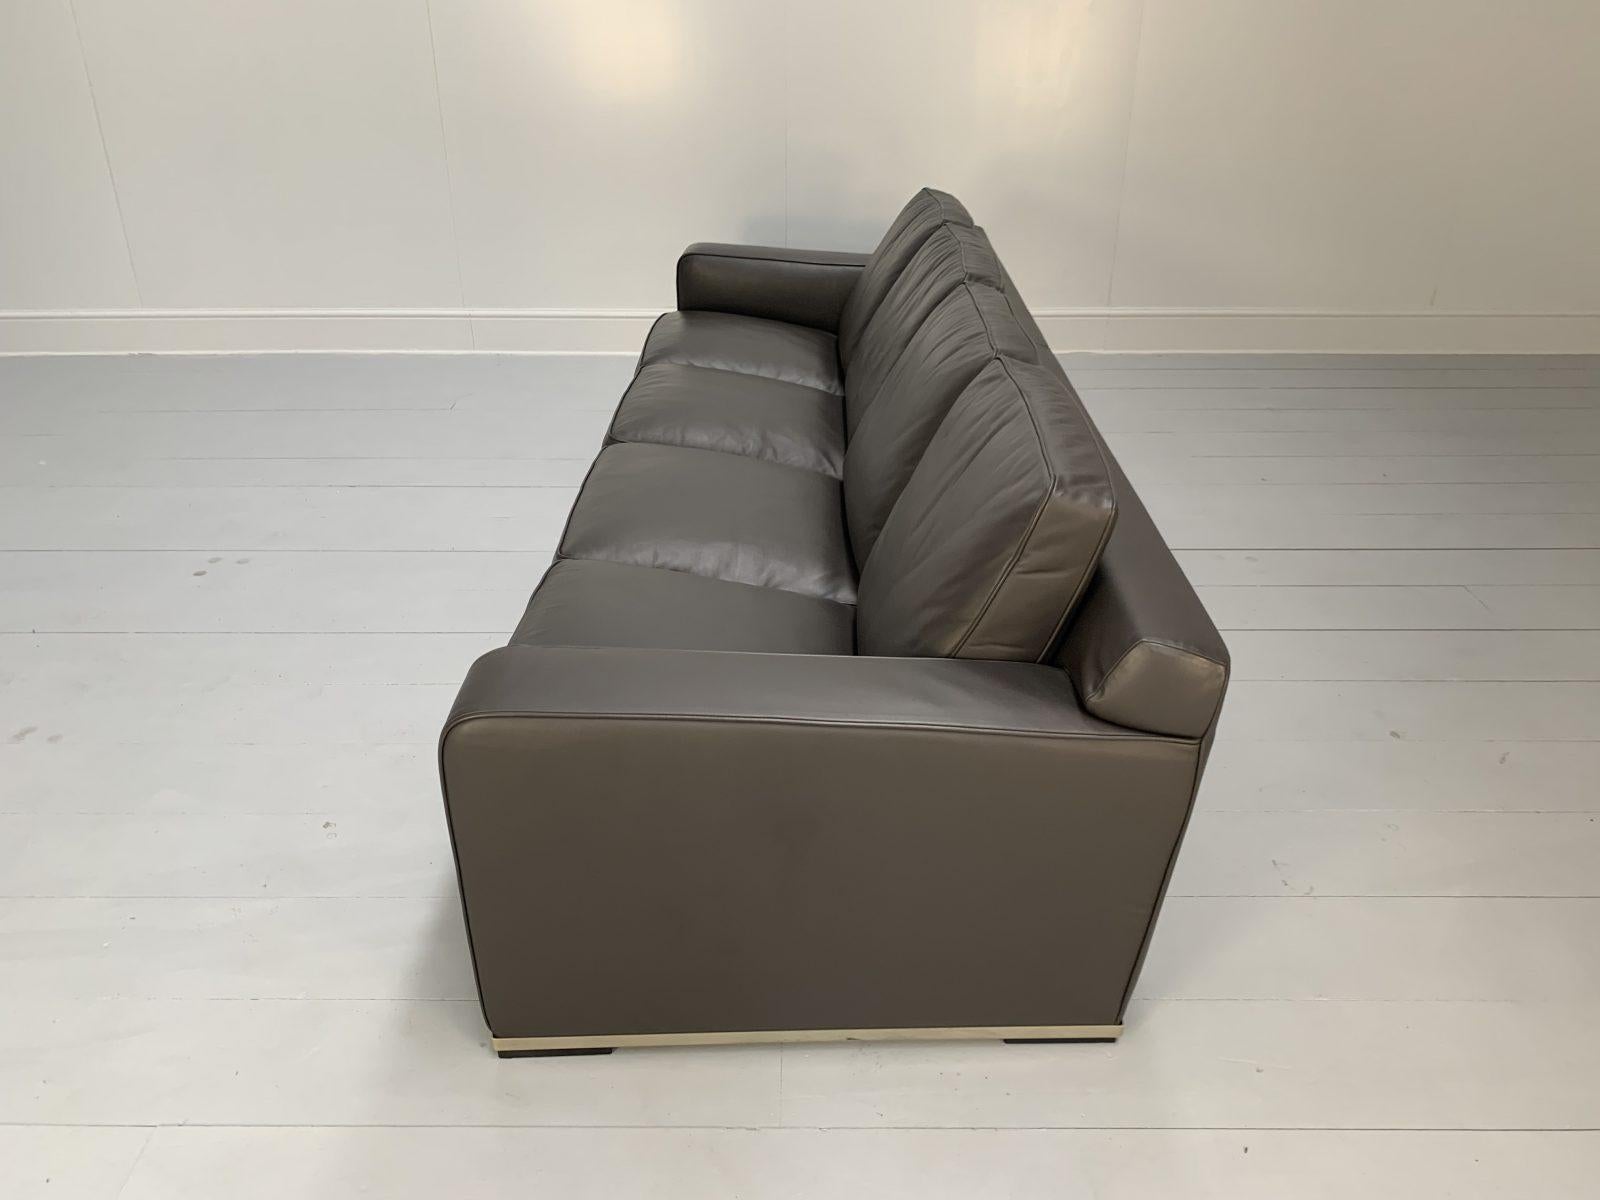 B&B Italia “Imprimateur Apta” 4-Seat Sofa in Dark Grey “Gamma” Leather For Sale 5